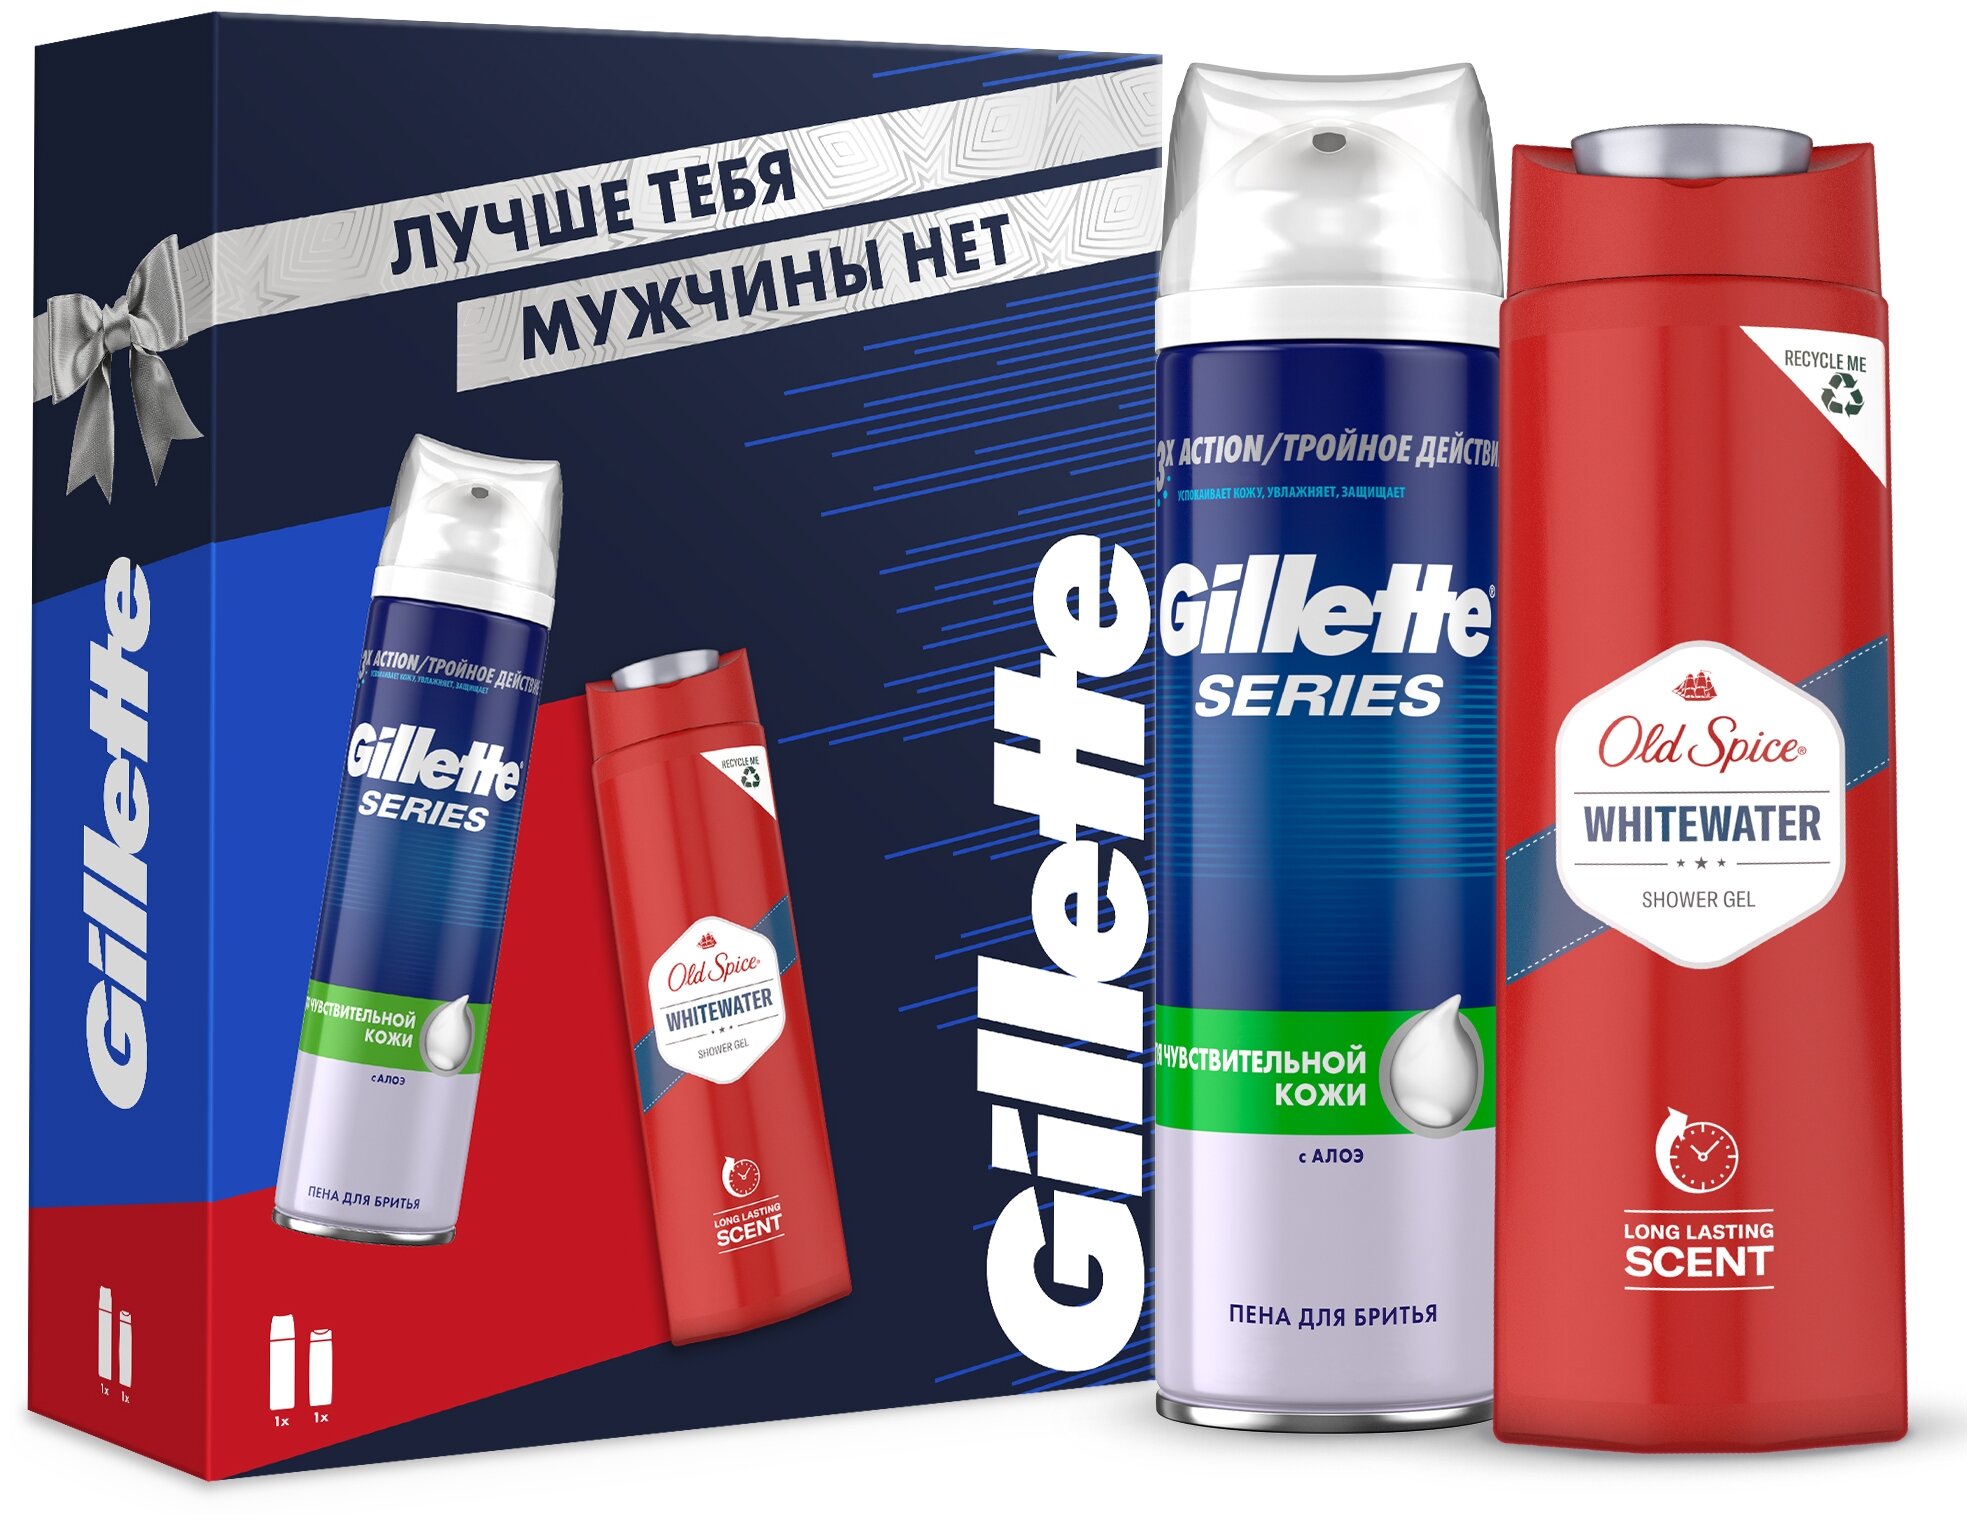 Gillette Подарочный набор: пена для бритья Series, 250 мл + гель для душа Old Spice WhiteWater, 250 мл